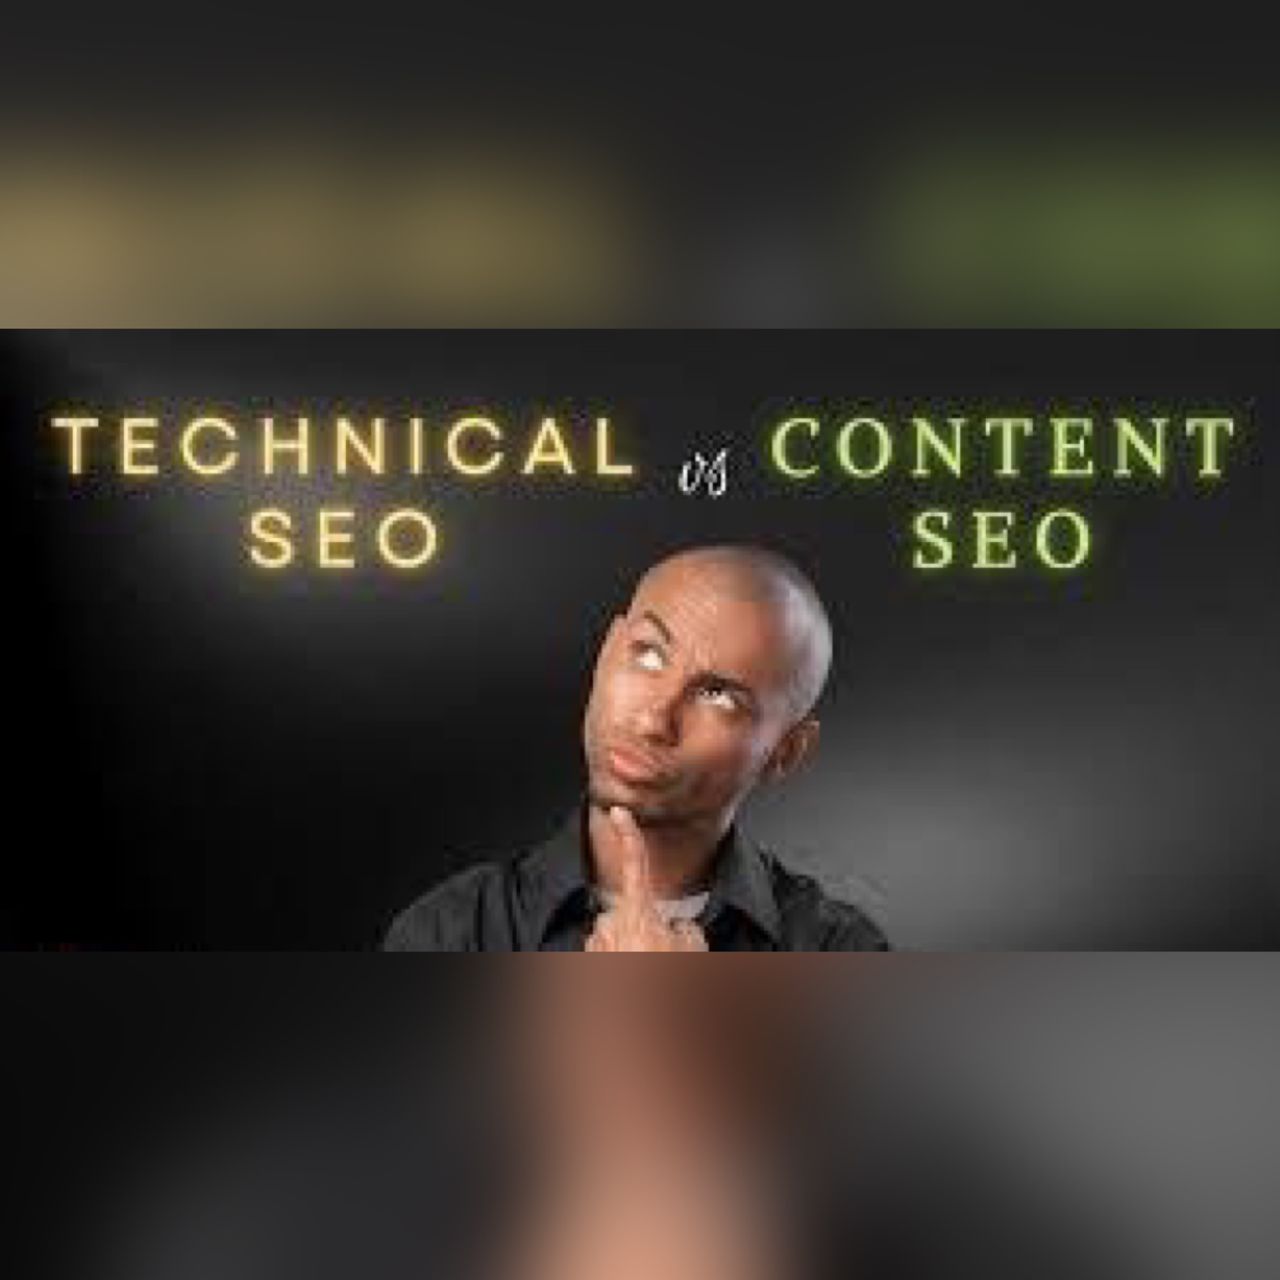 Technical SEO vs Content SEO